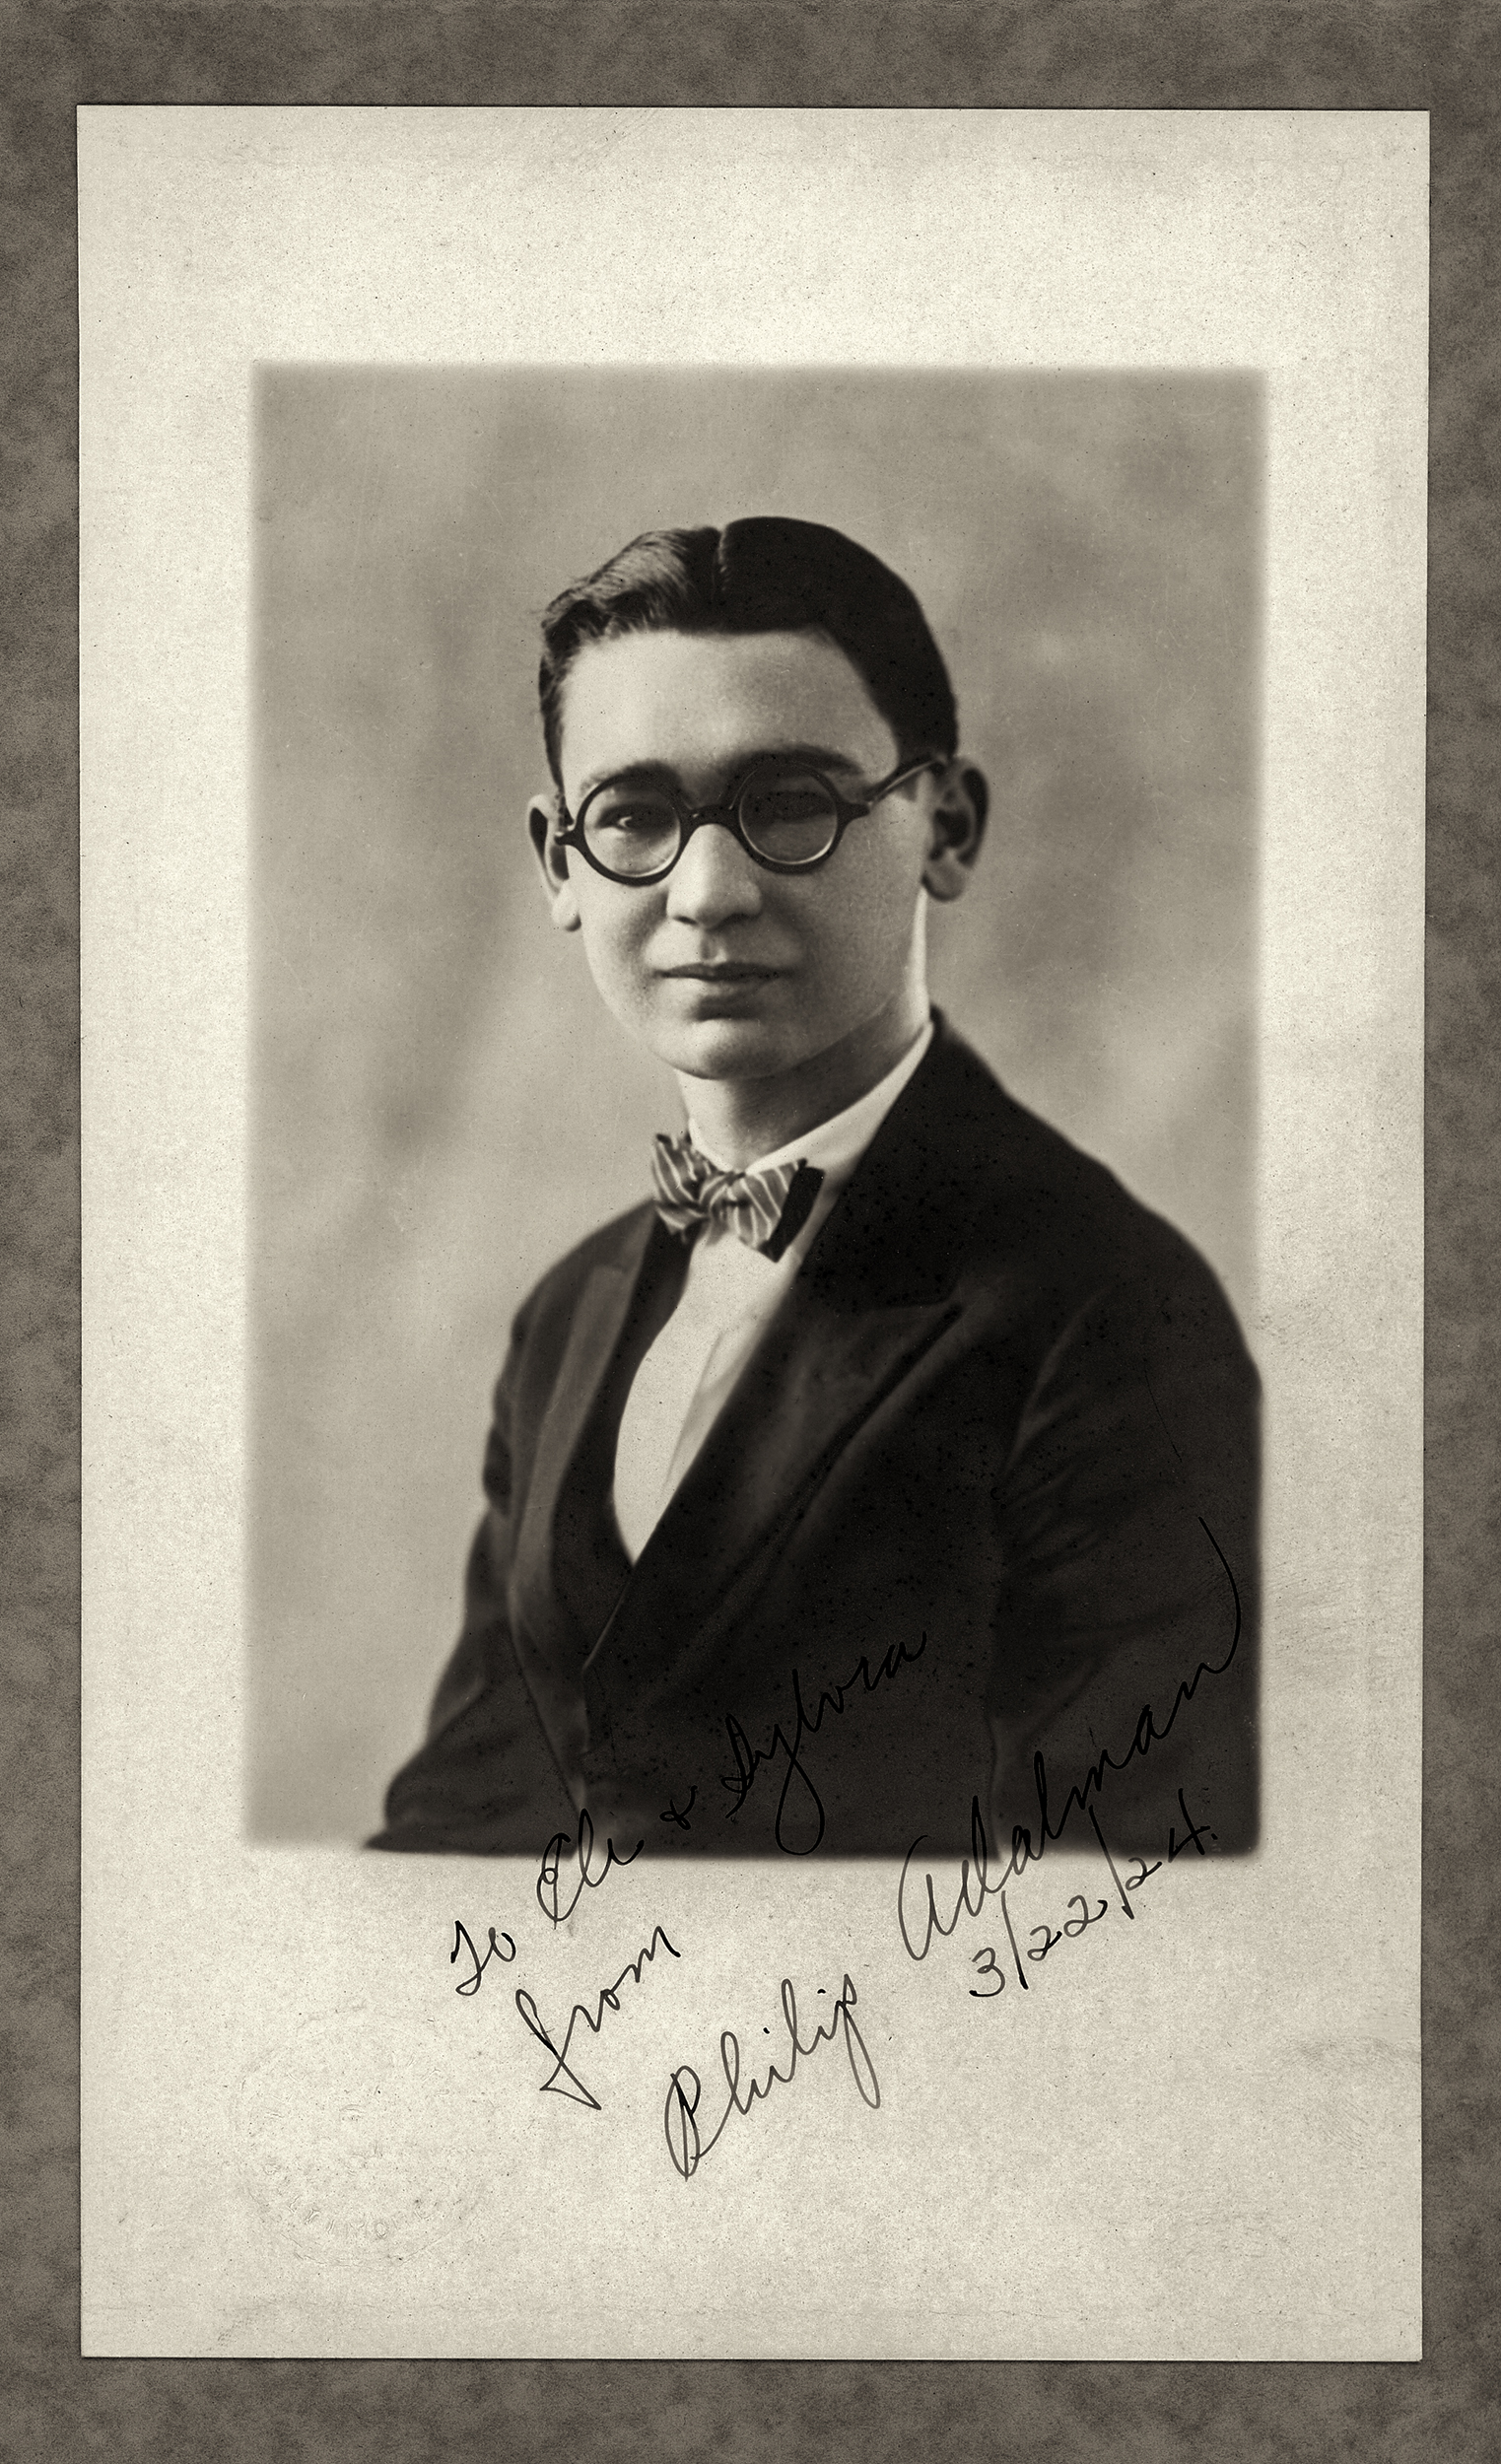 Philip Adalman in 1924 (18 years old)